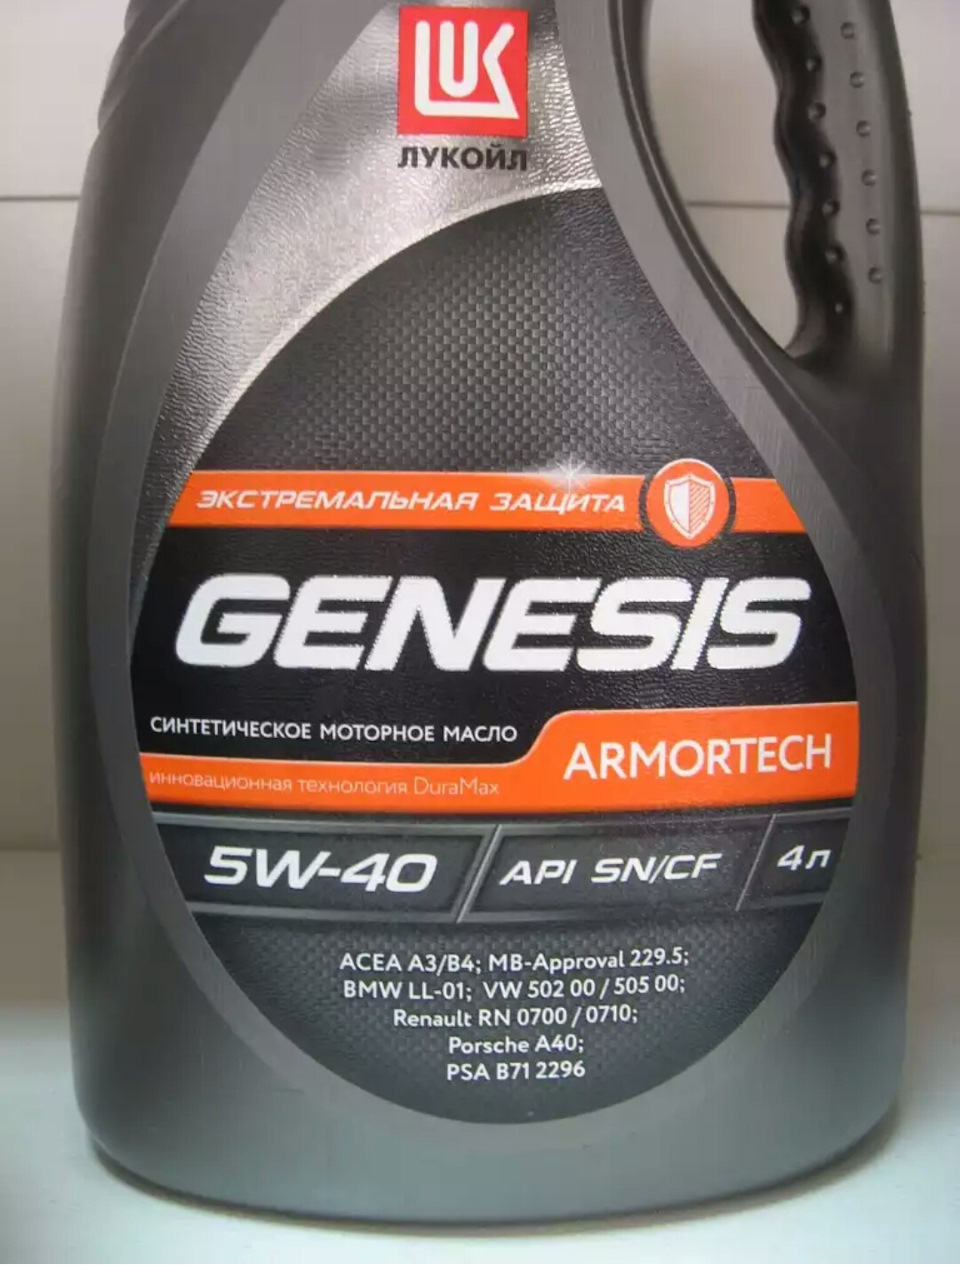 Моторное масло купить 5w40 лукойл genesis armortech. 5w-40 Genesis Armortech 4л. Genesis Armortech 5w40 SN/CF. Масло Лукойл 5w40 Genesis Armortech. Lukoil Genesis Armortech 5w-40 4л.